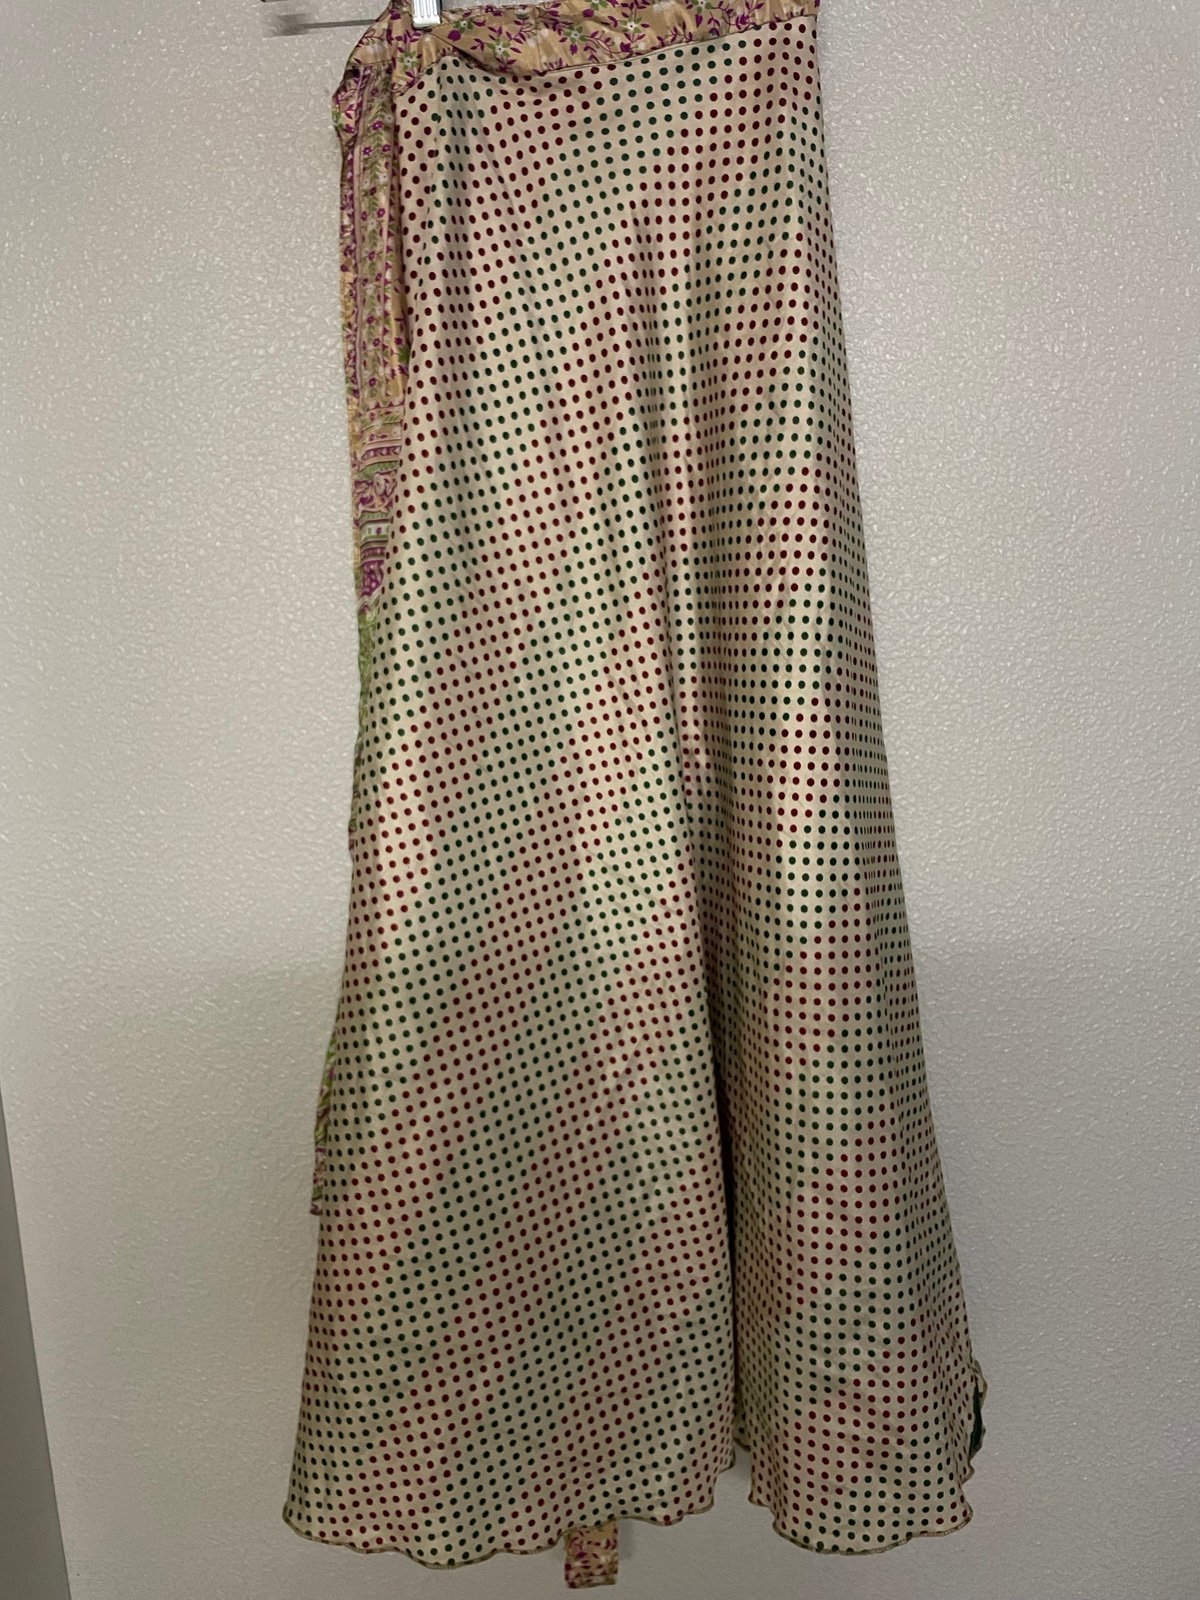 Stylish One size recycled sari wrap skirt. NWOT. Reversible jgtoSAOmN Online Shop